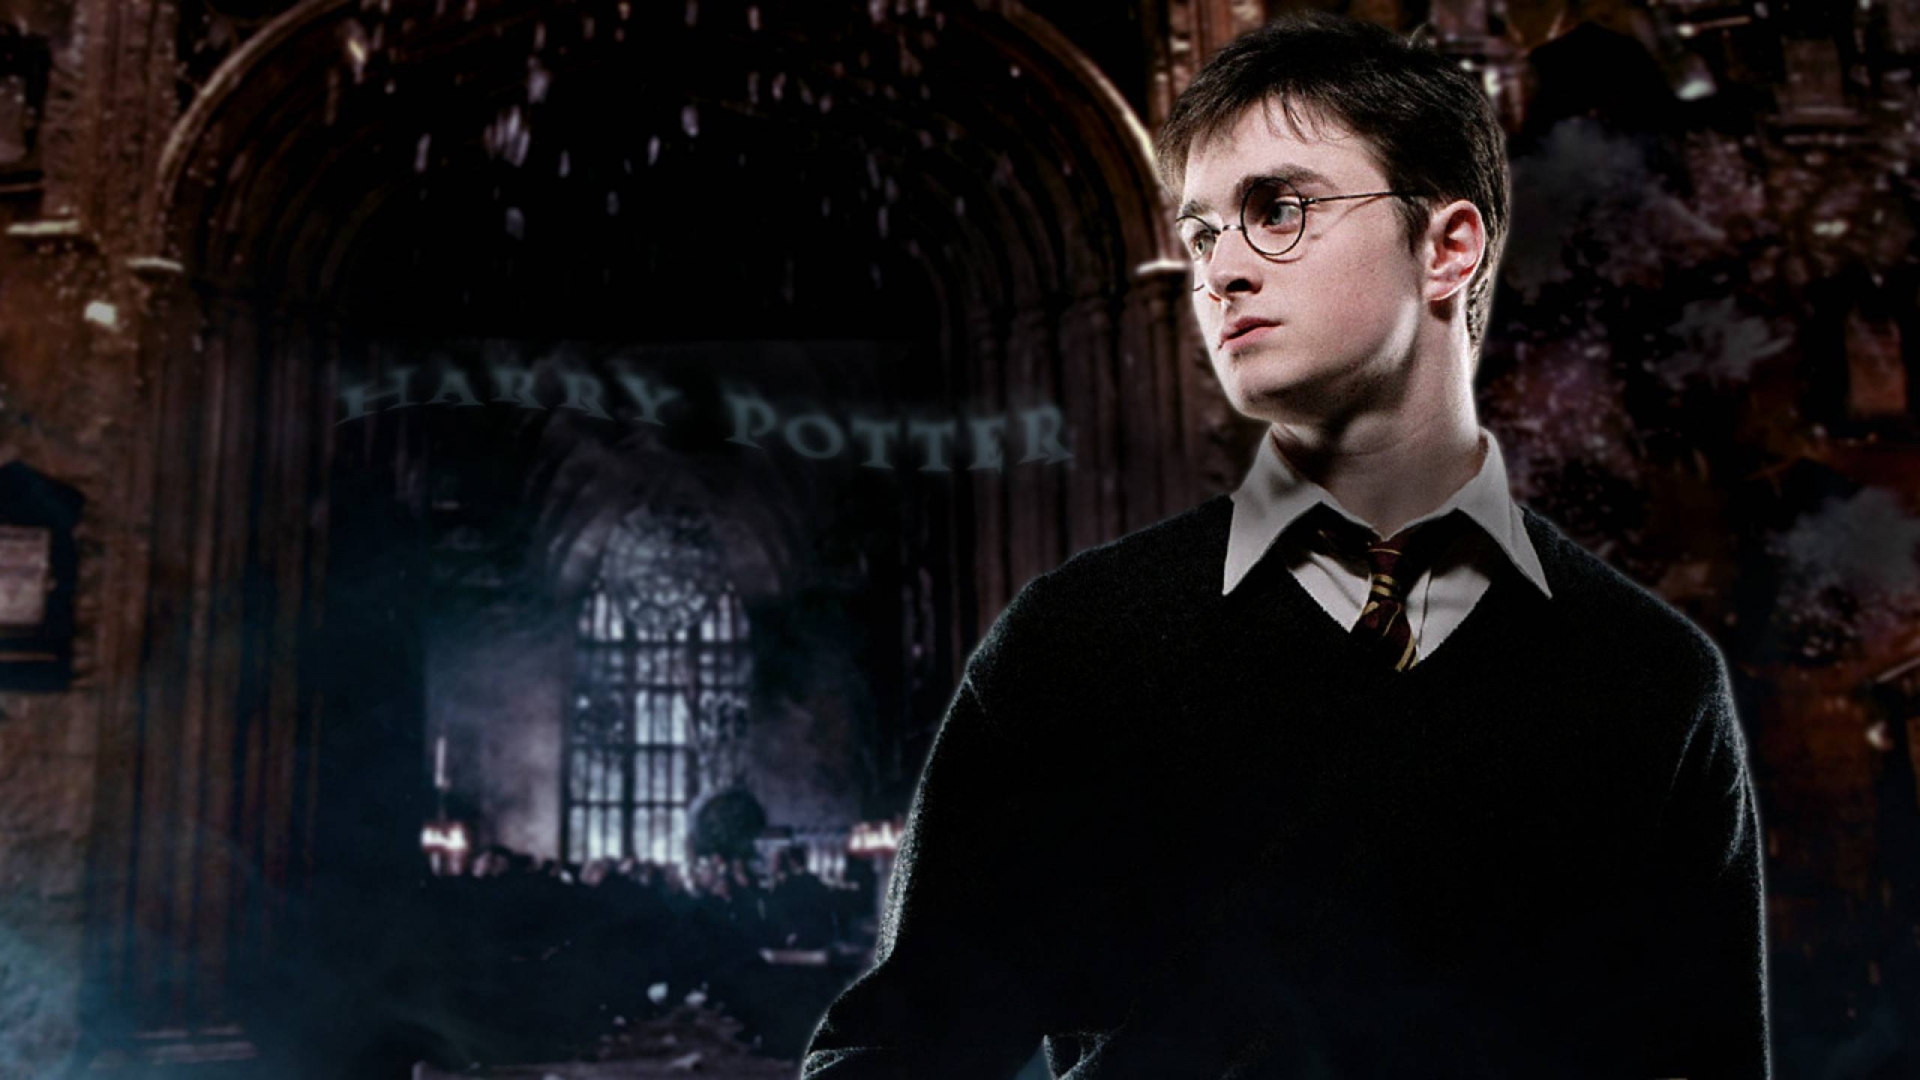 Harry Potter Daniel Radcliffe for 1920 x 1080 HDTV 1080p resolution